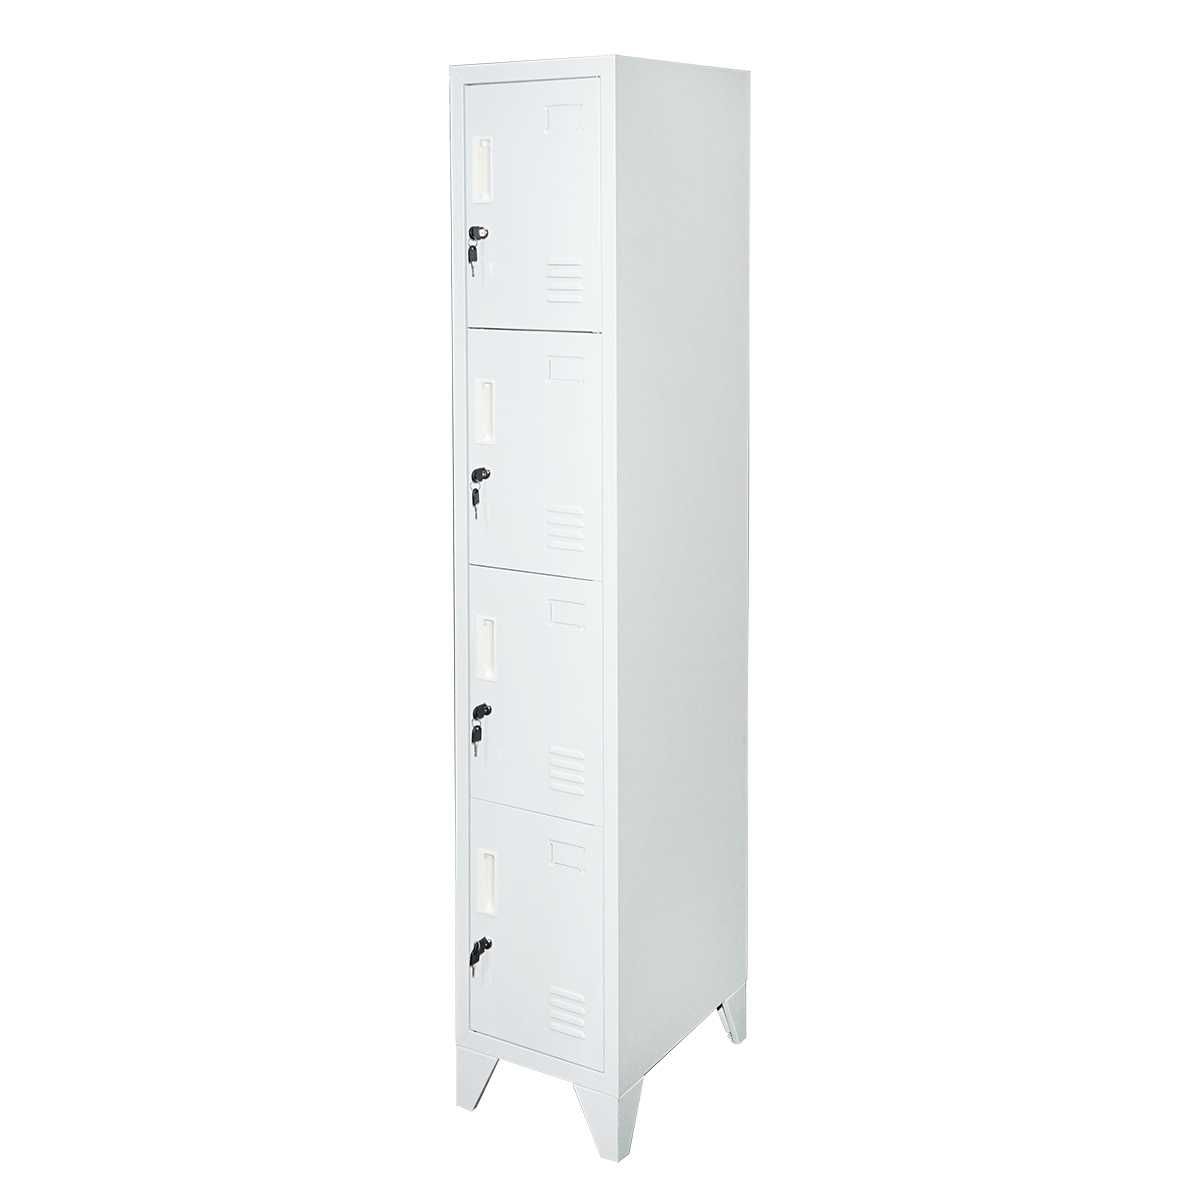 Dulap Vestiar Cabinet  Metalic  170 x 30 x 45 cm + LIVRARE GRATUITA